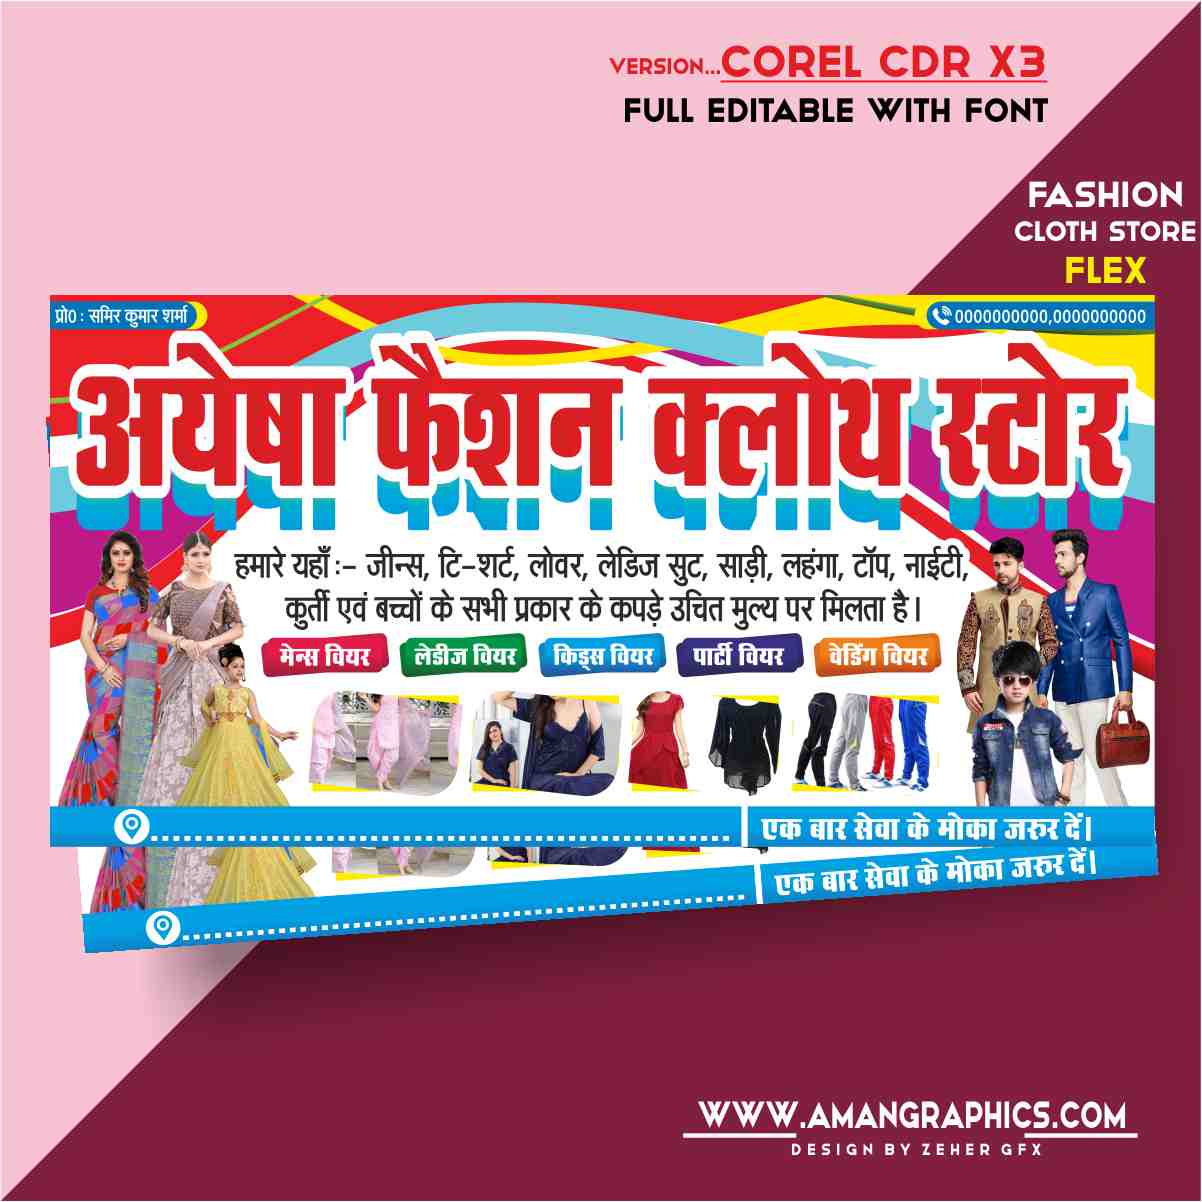 Ayesha Fashion Cloth Store Banner Design Cdr File